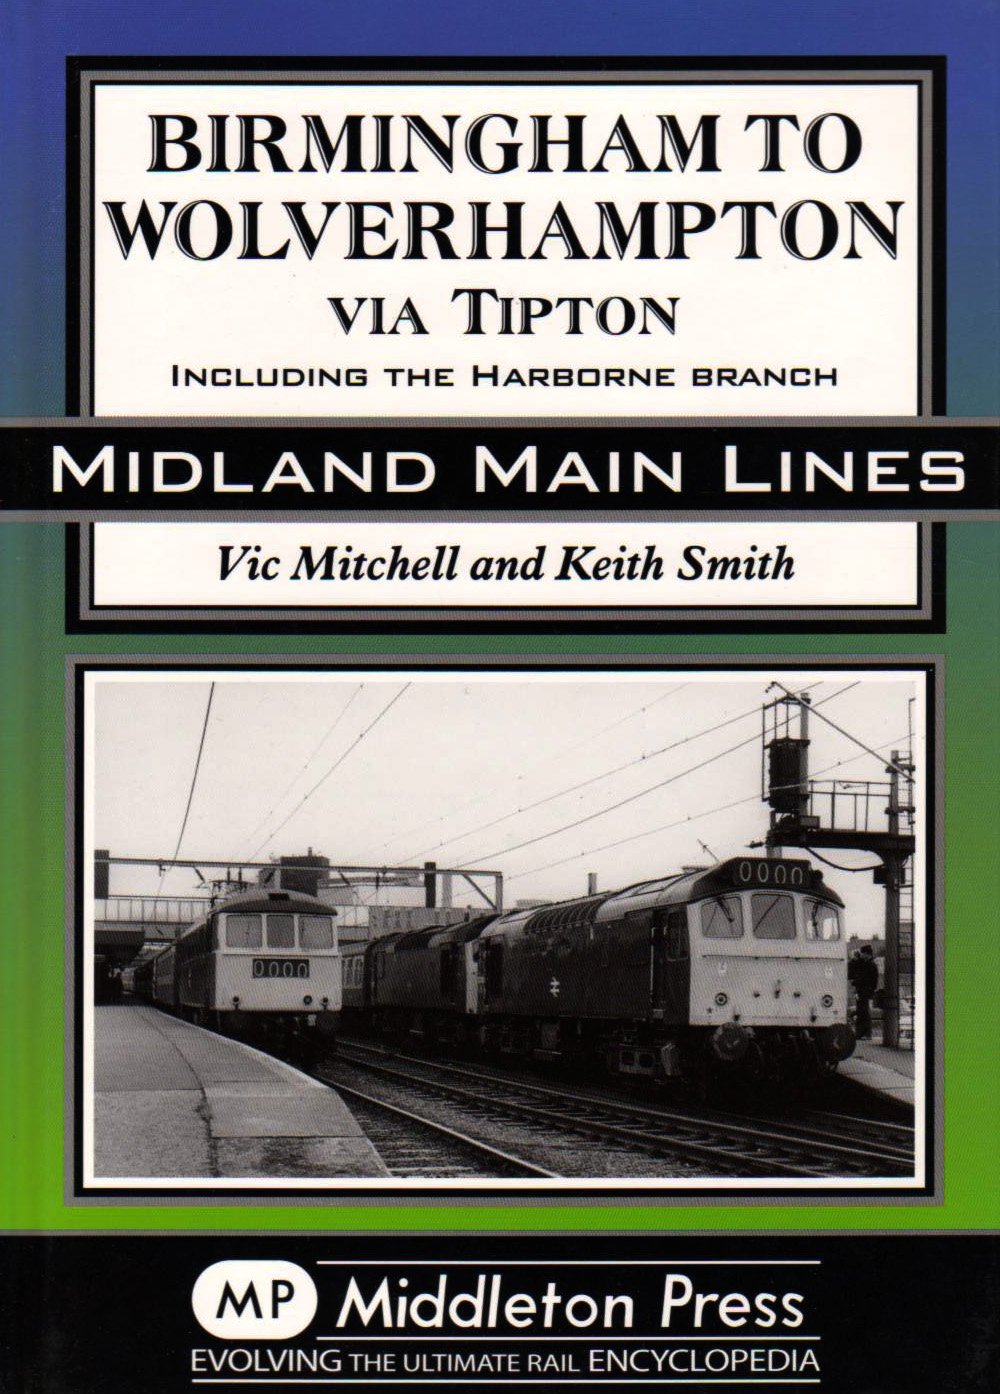 Midland Main Lines Birmingham to Wolverhampton via Tipton including the Harborne Branch